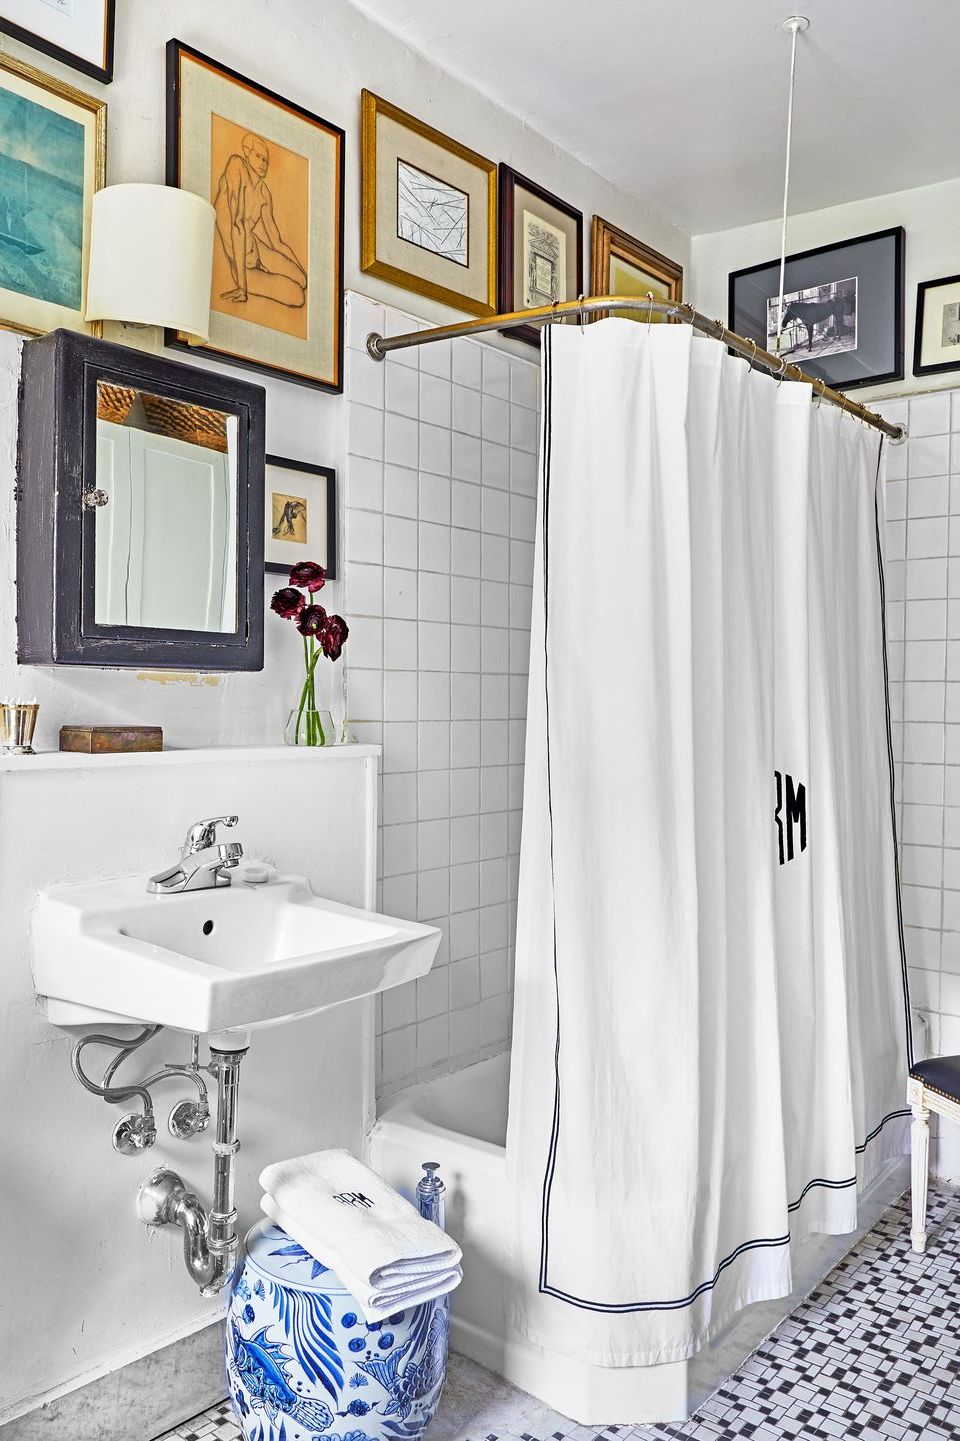 Top 10 Best DIY Shower Caddies  Home, Diy shower, Diy bathroom